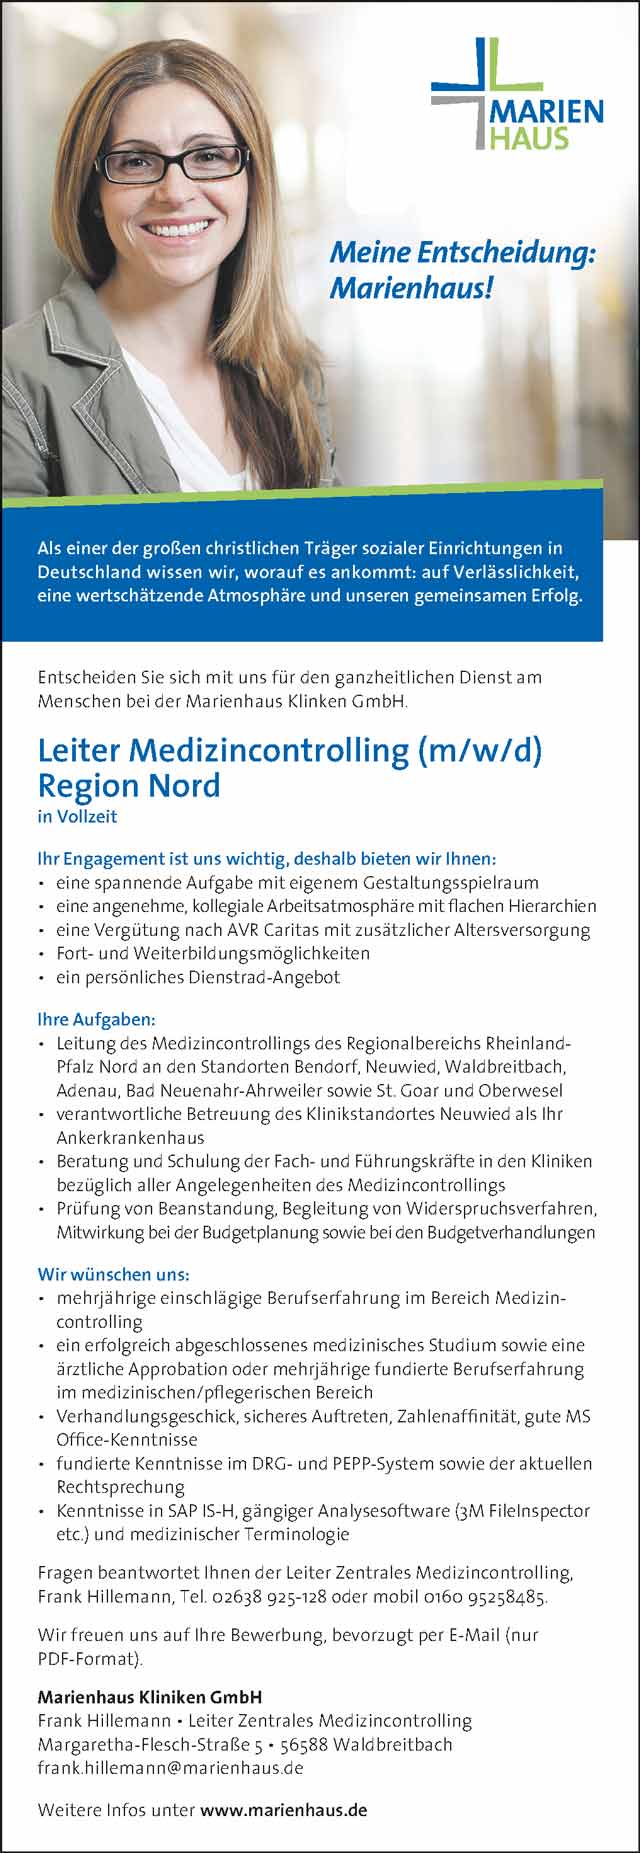 Marienhaus Kliniken GmbH: Leiter Medizincontrolling (m/w/d)